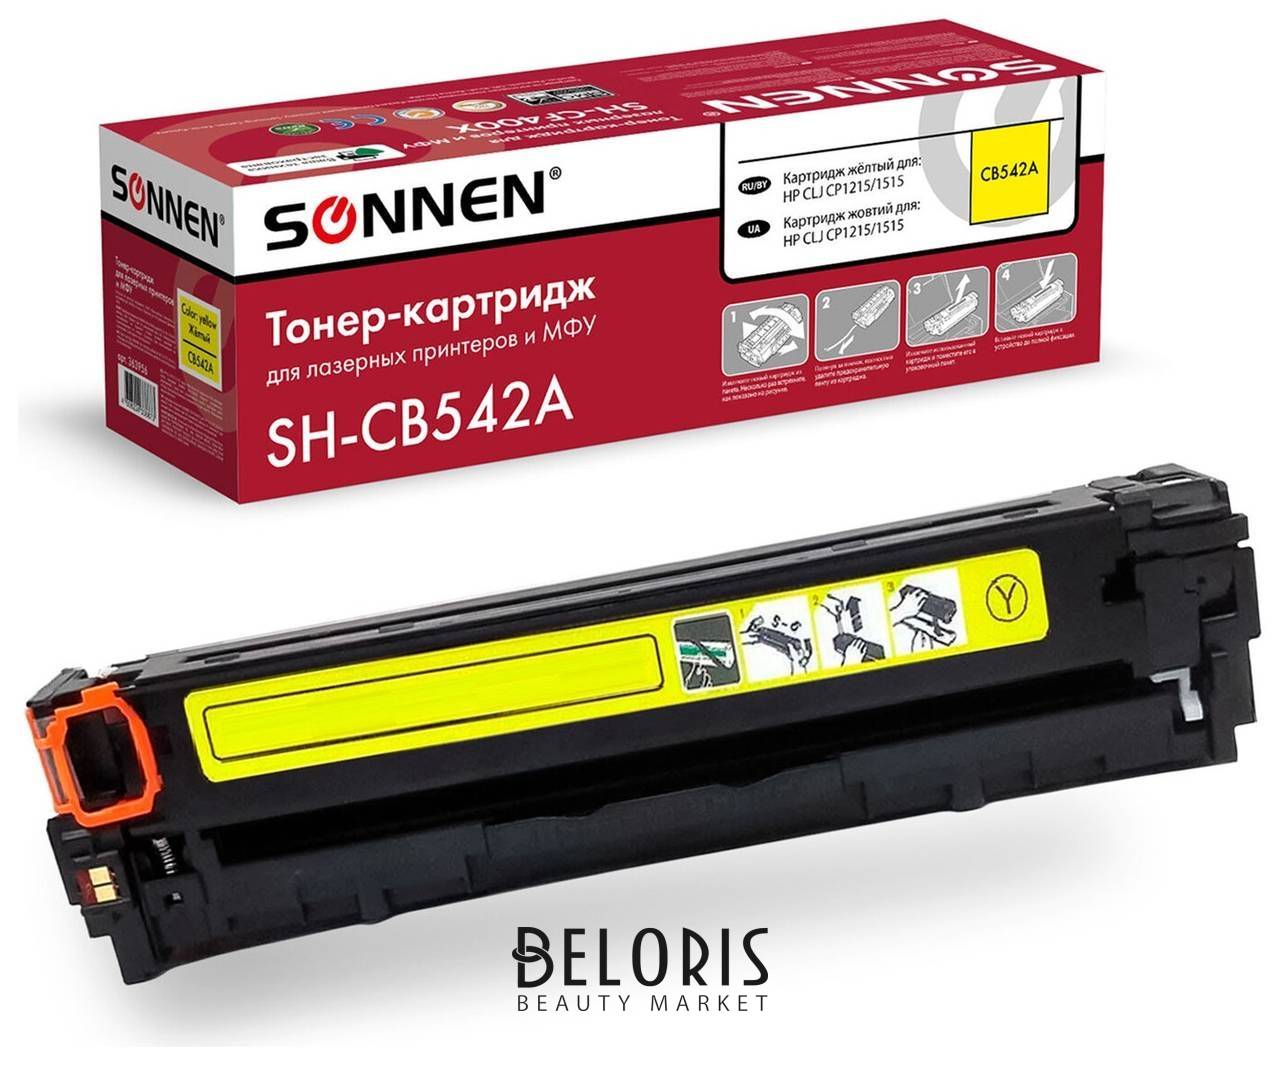 Картридж лазерный Sonnen (Sh-cb542a) для HP CLJ Cp1215/1515 высшее качество, желтый, 1400 страниц, 363956 Sonnen